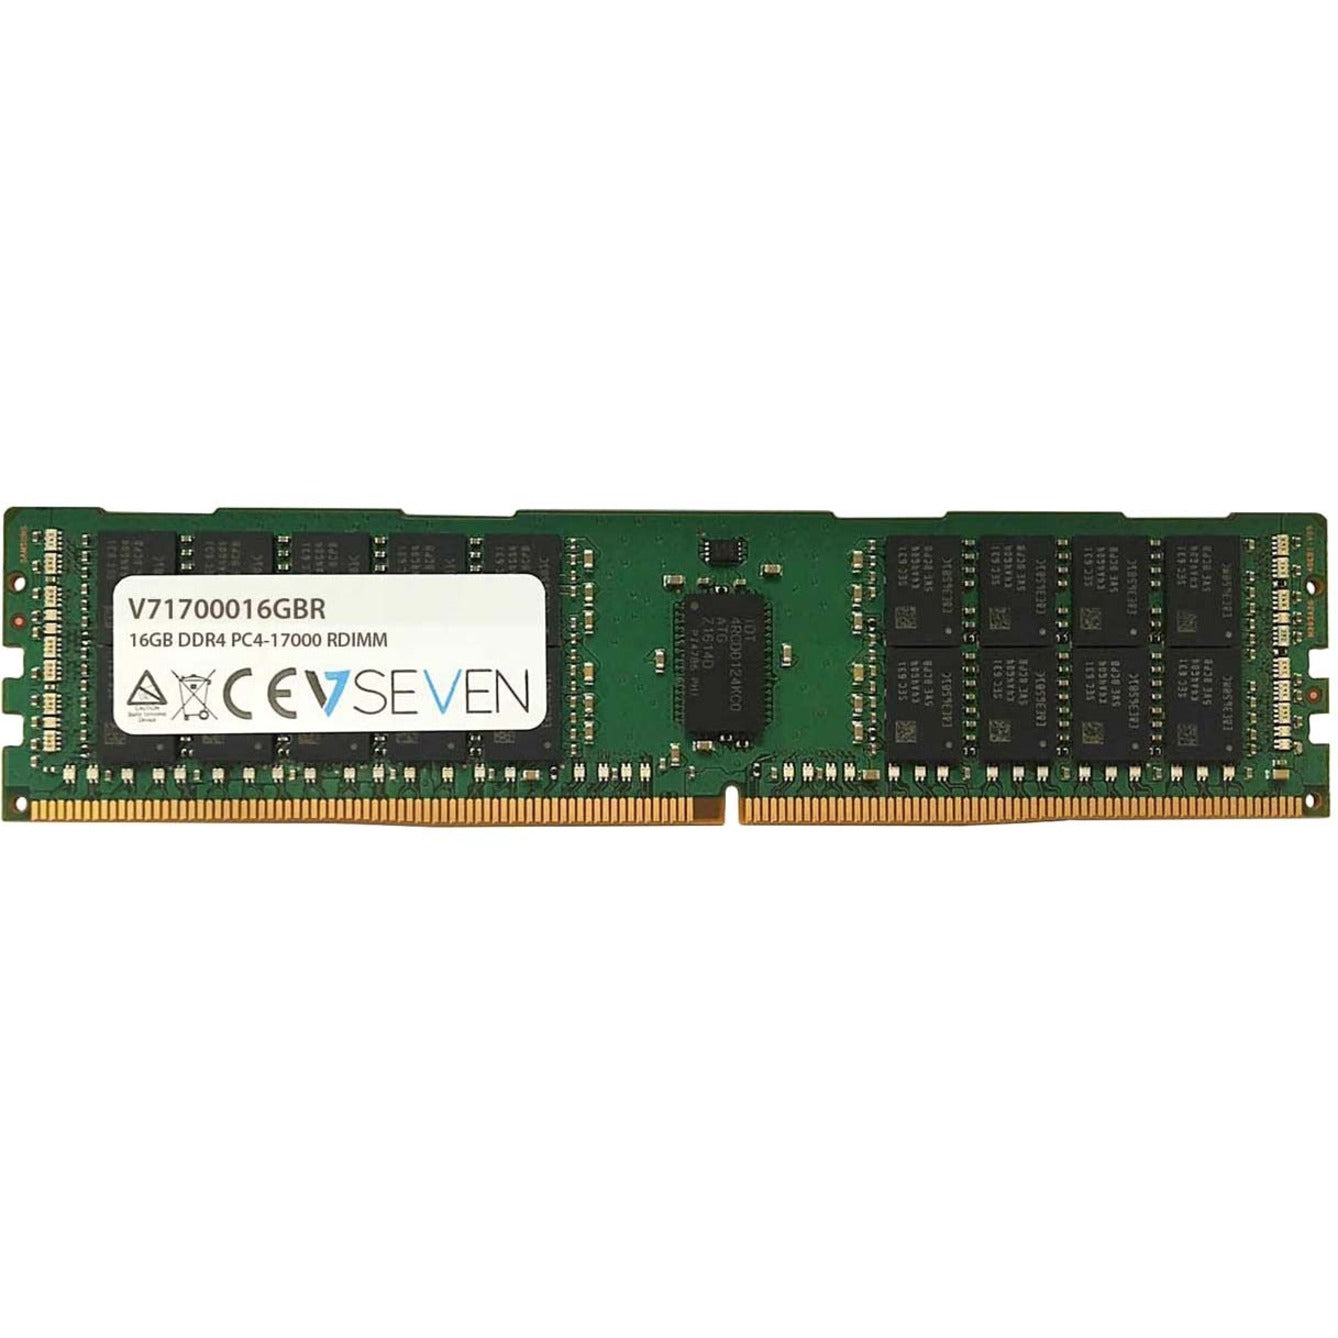 V7 V71700016GBR 16GB DDR4 PC4-170000 - 2133Mhz SERVER REG Server Memory Module, 10 Year Limited Warranty, ECC, Registered